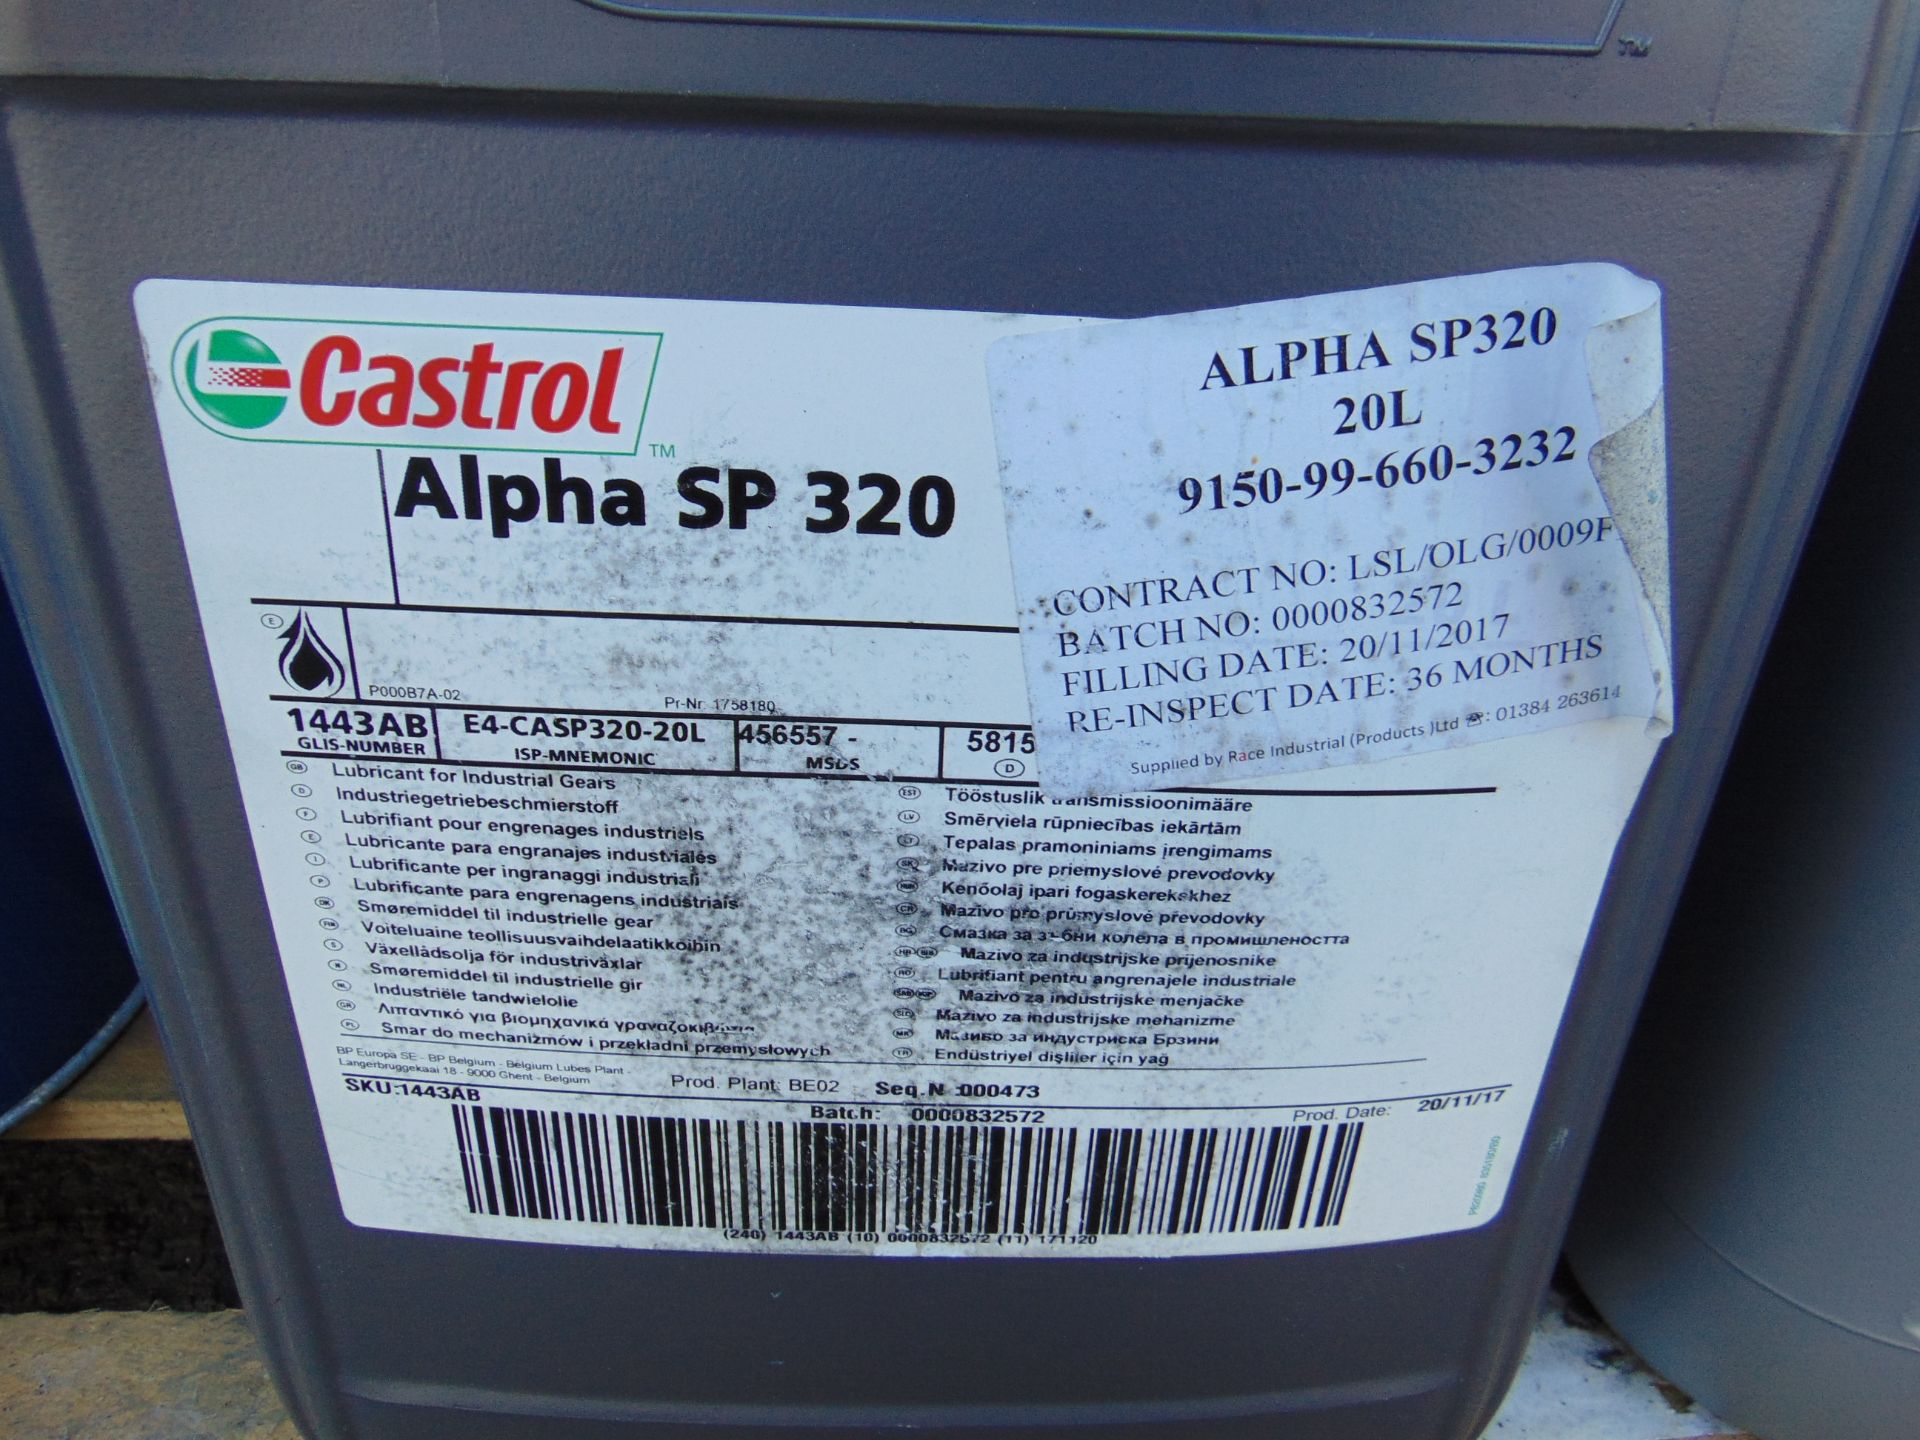 3x 25 litre Drums of Castrol Alpha SP320 Extreme Pressure Gear Oil - Image 2 of 2